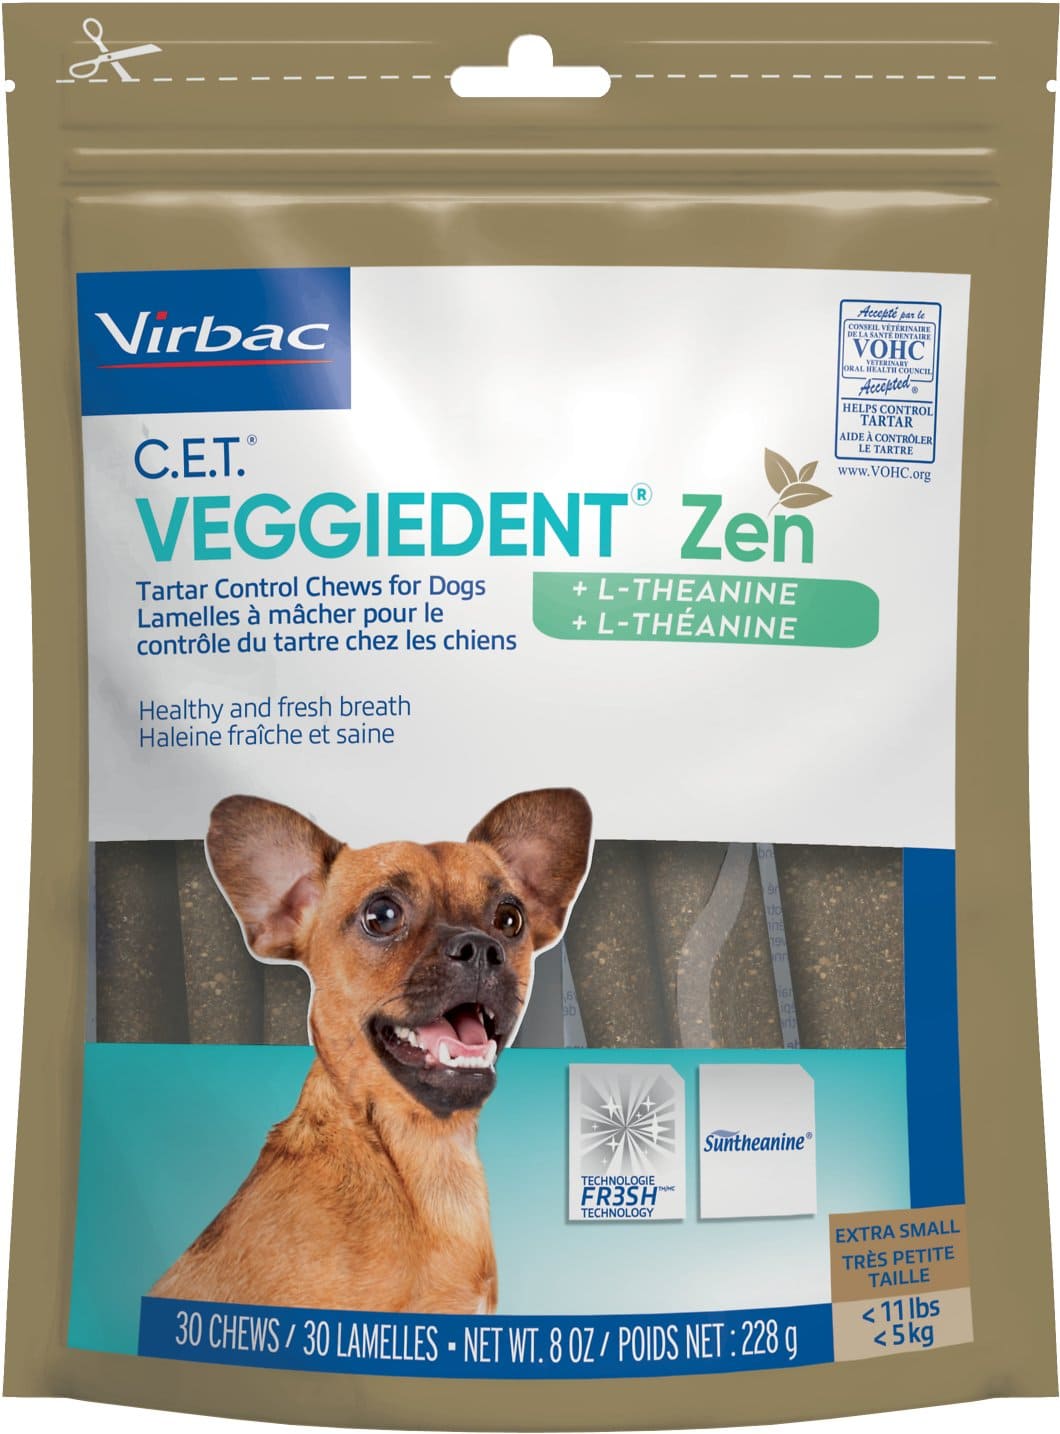 C.E.T. VeggieDent Zen + L-Theanine